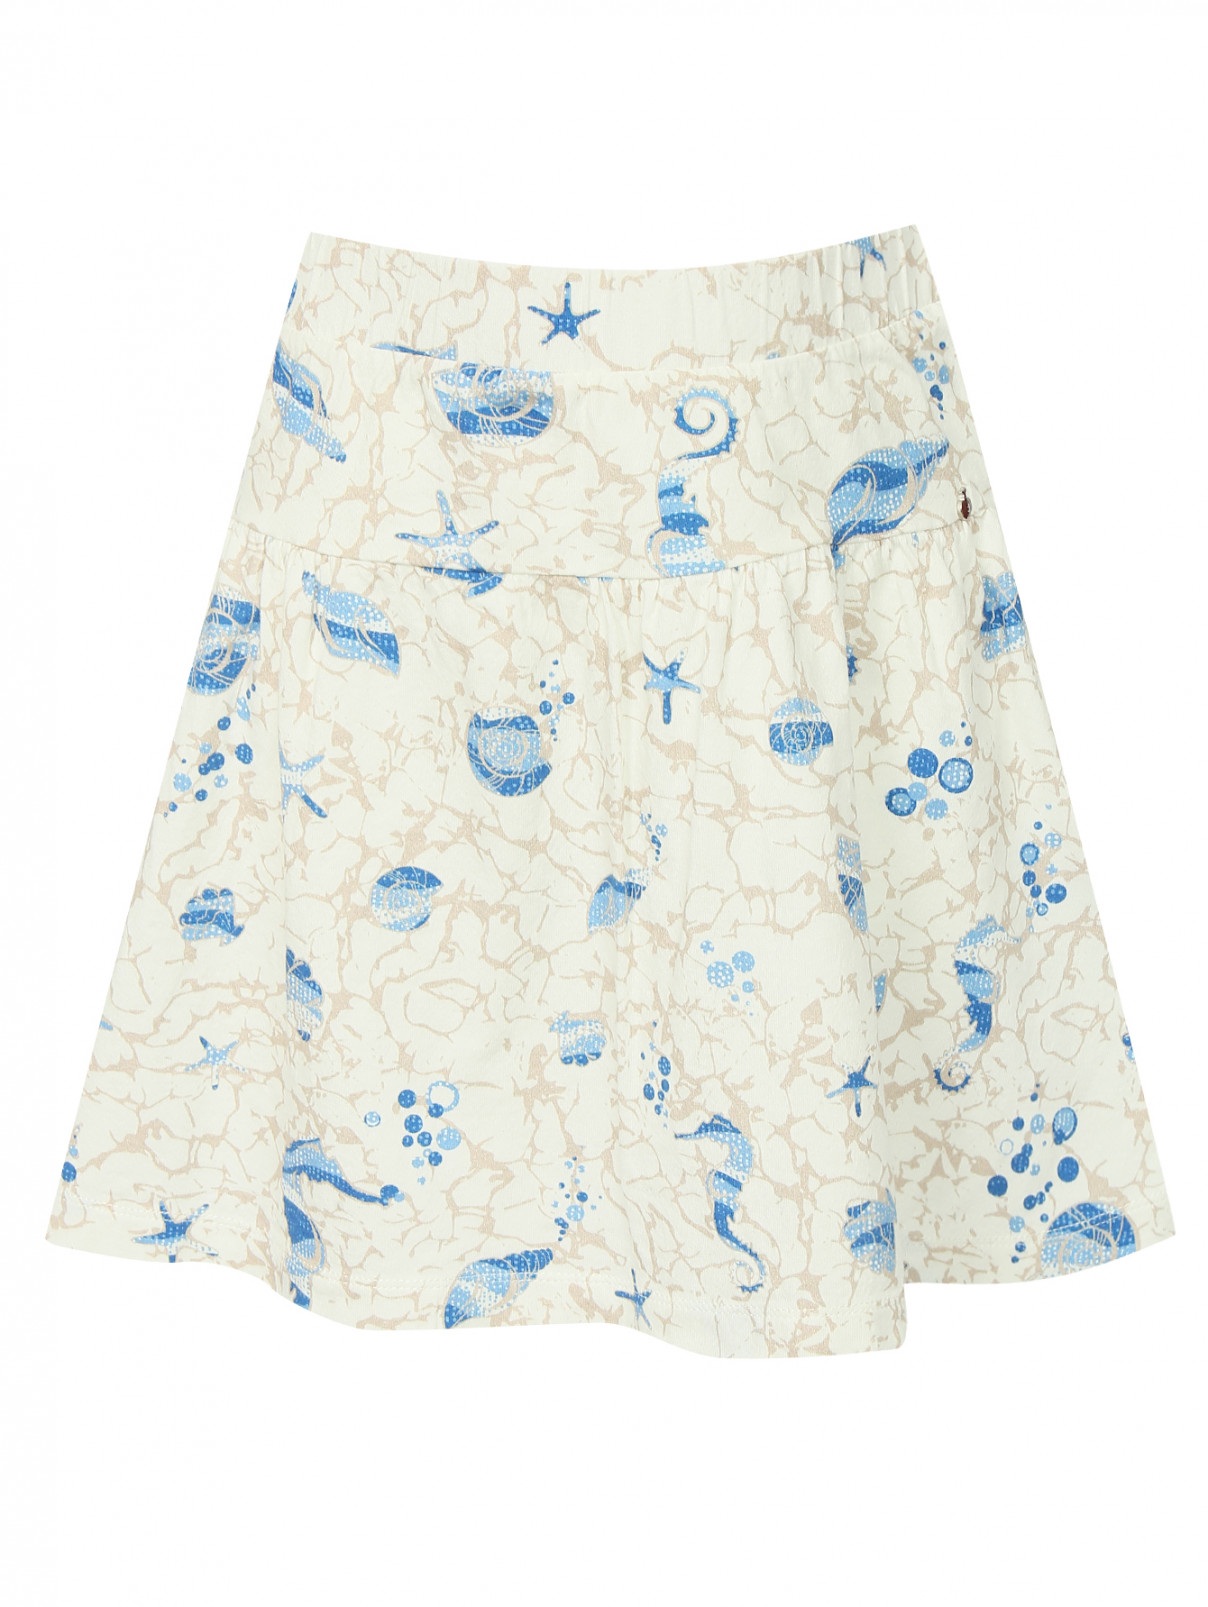 Трикотажная юбка с морским узором BOSCO  –  Общий вид  – Цвет:  Узор